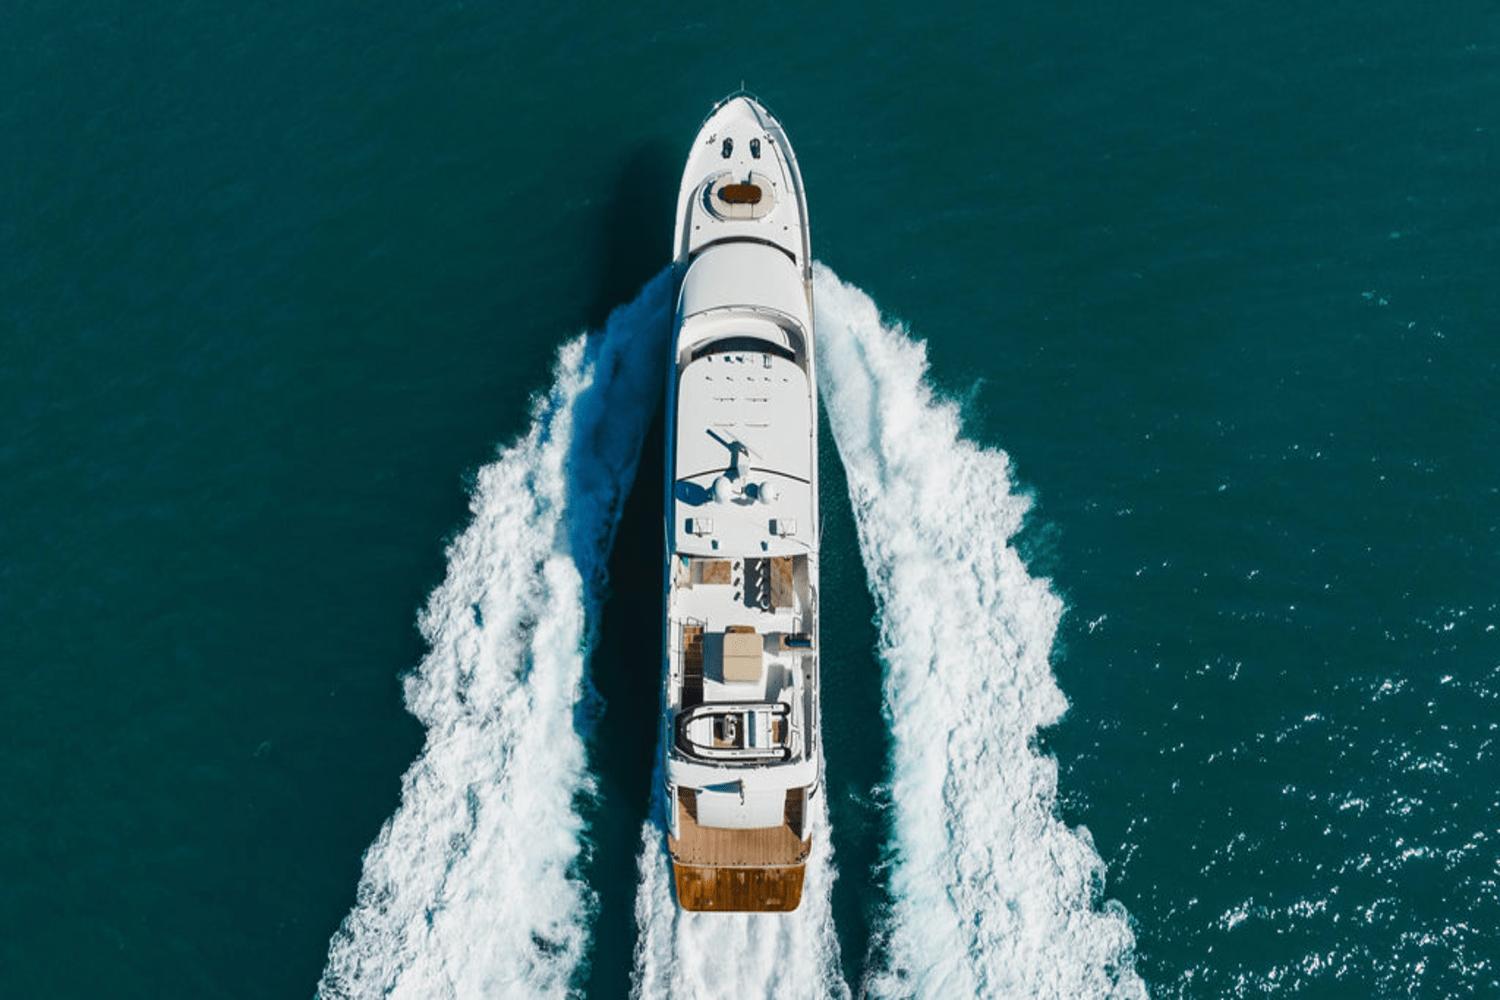 2018 Ocean Alexander 100 Motoryacht